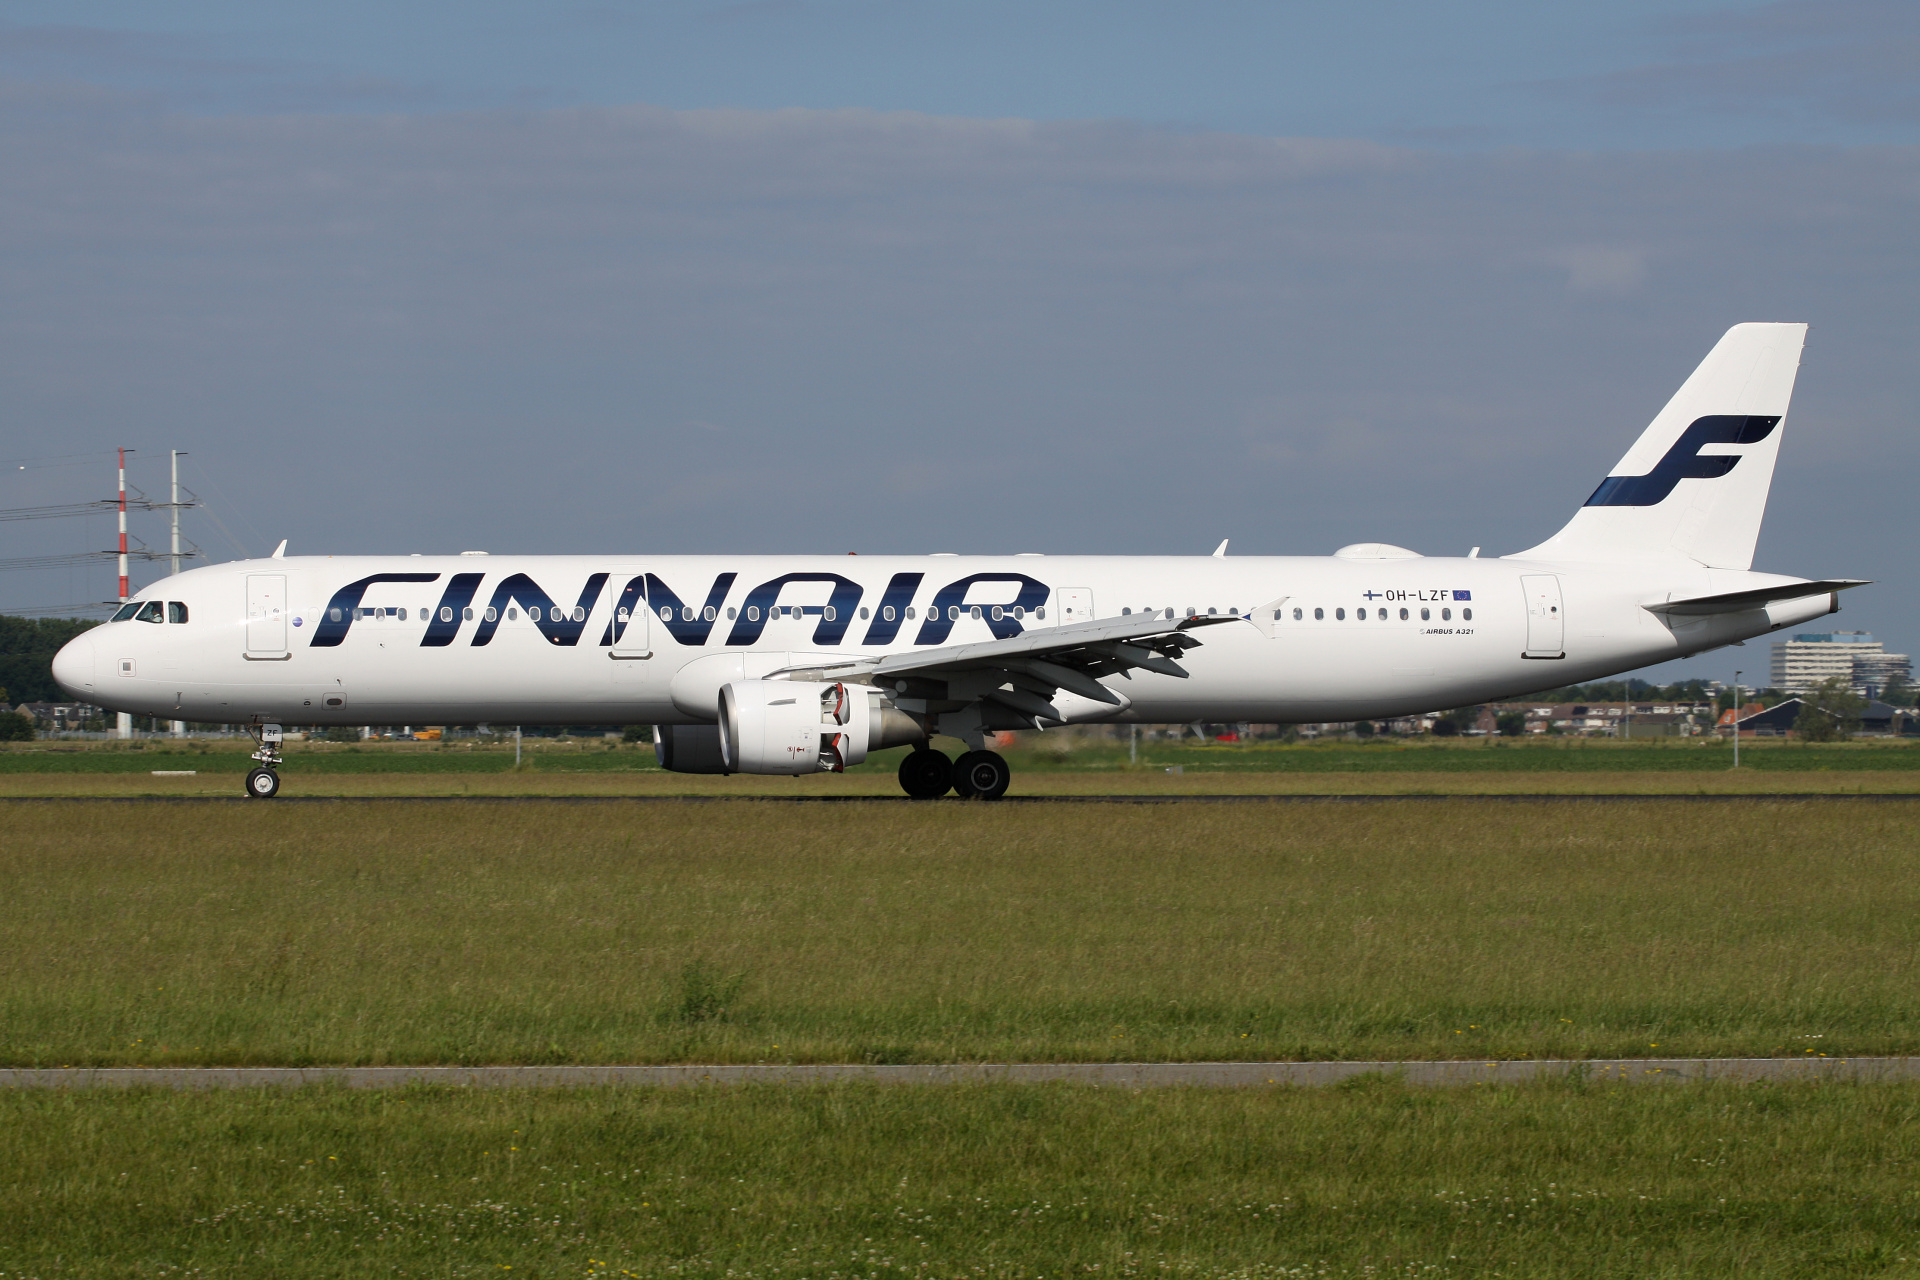 OH-LZF, Finnair (Aircraft » Schiphol Spotting » Airbus A321-200)